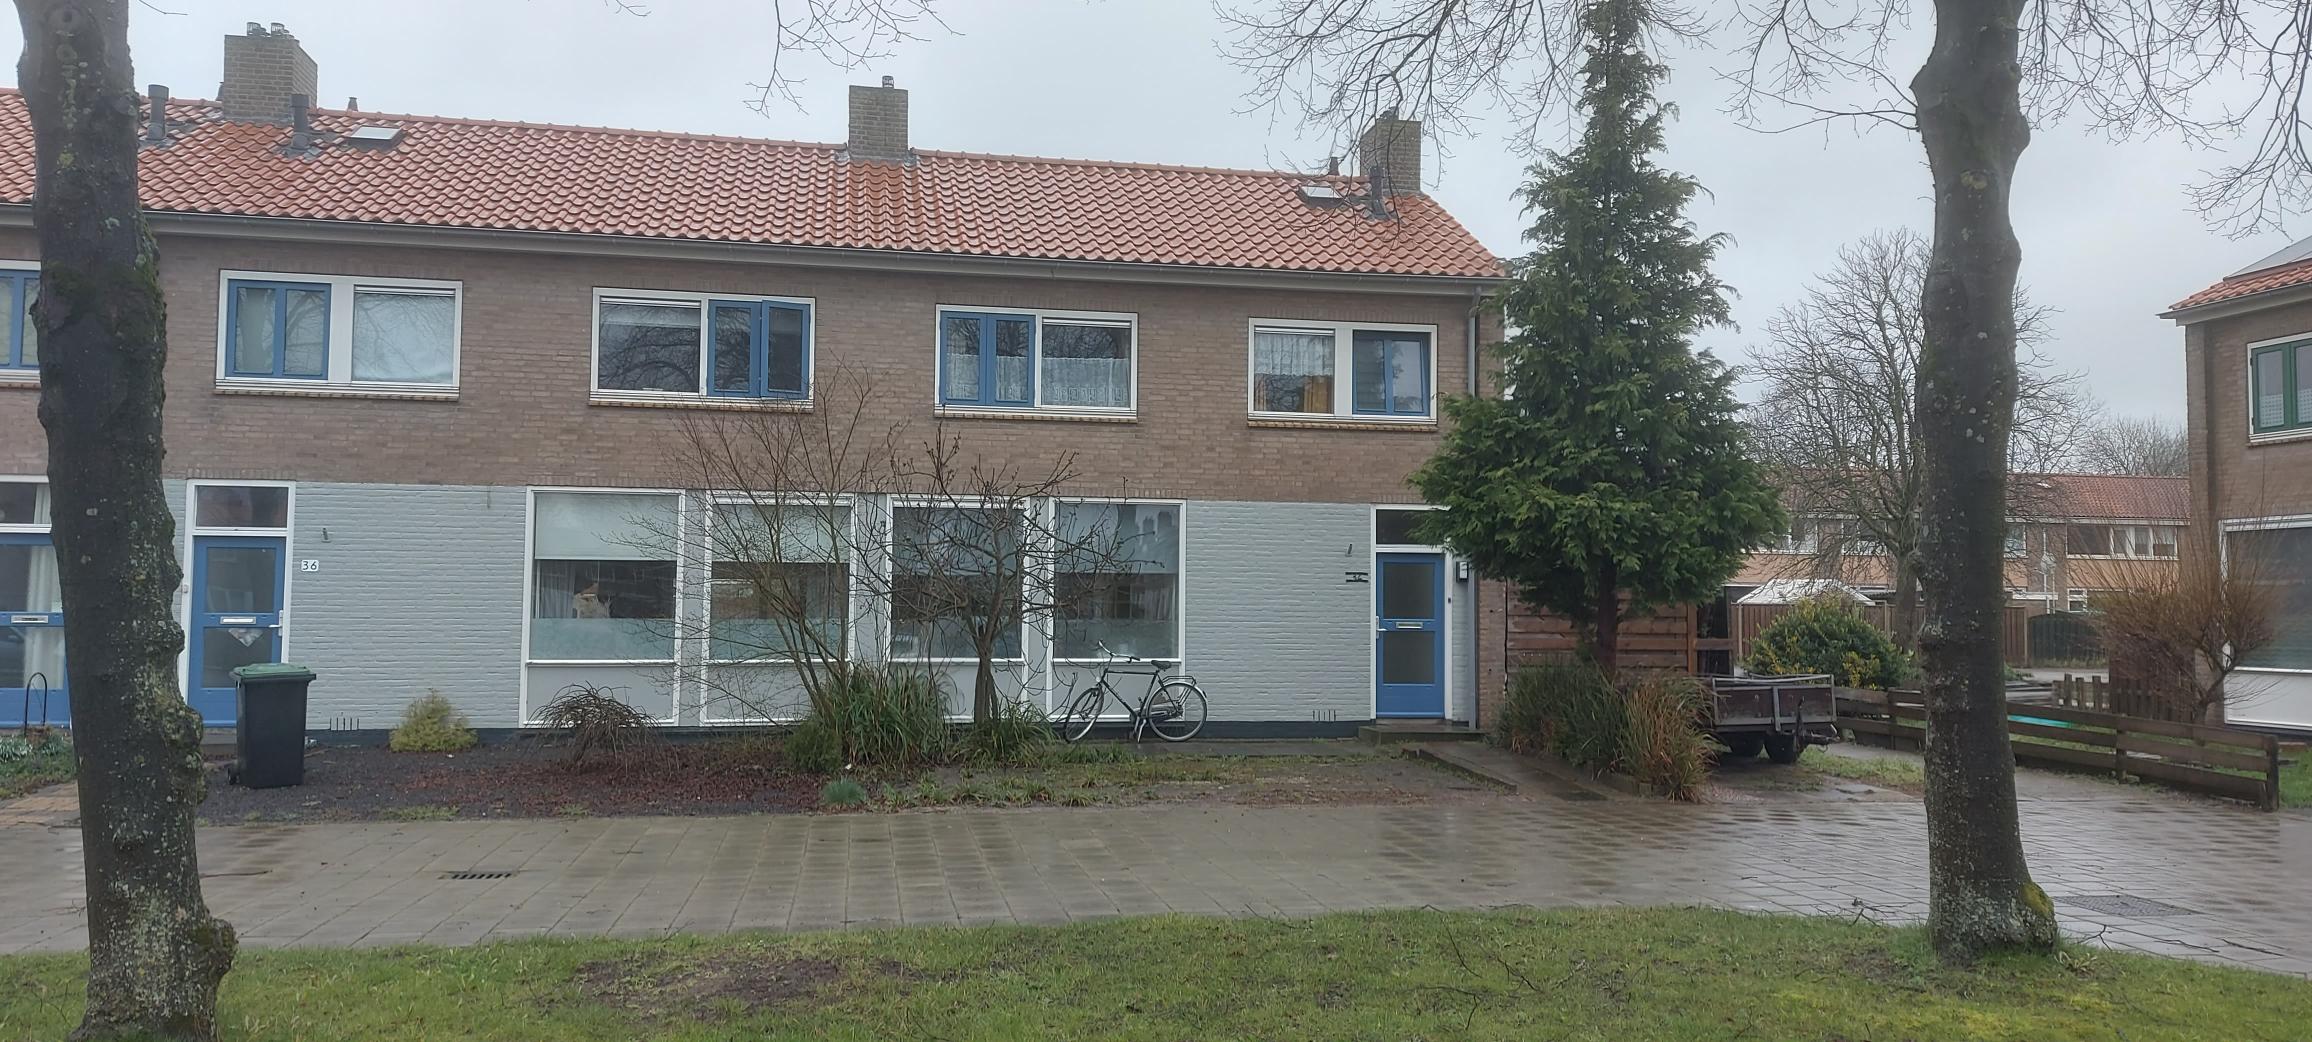 Spiegelstraat 34, 8251 ZC Dronten, Nederland